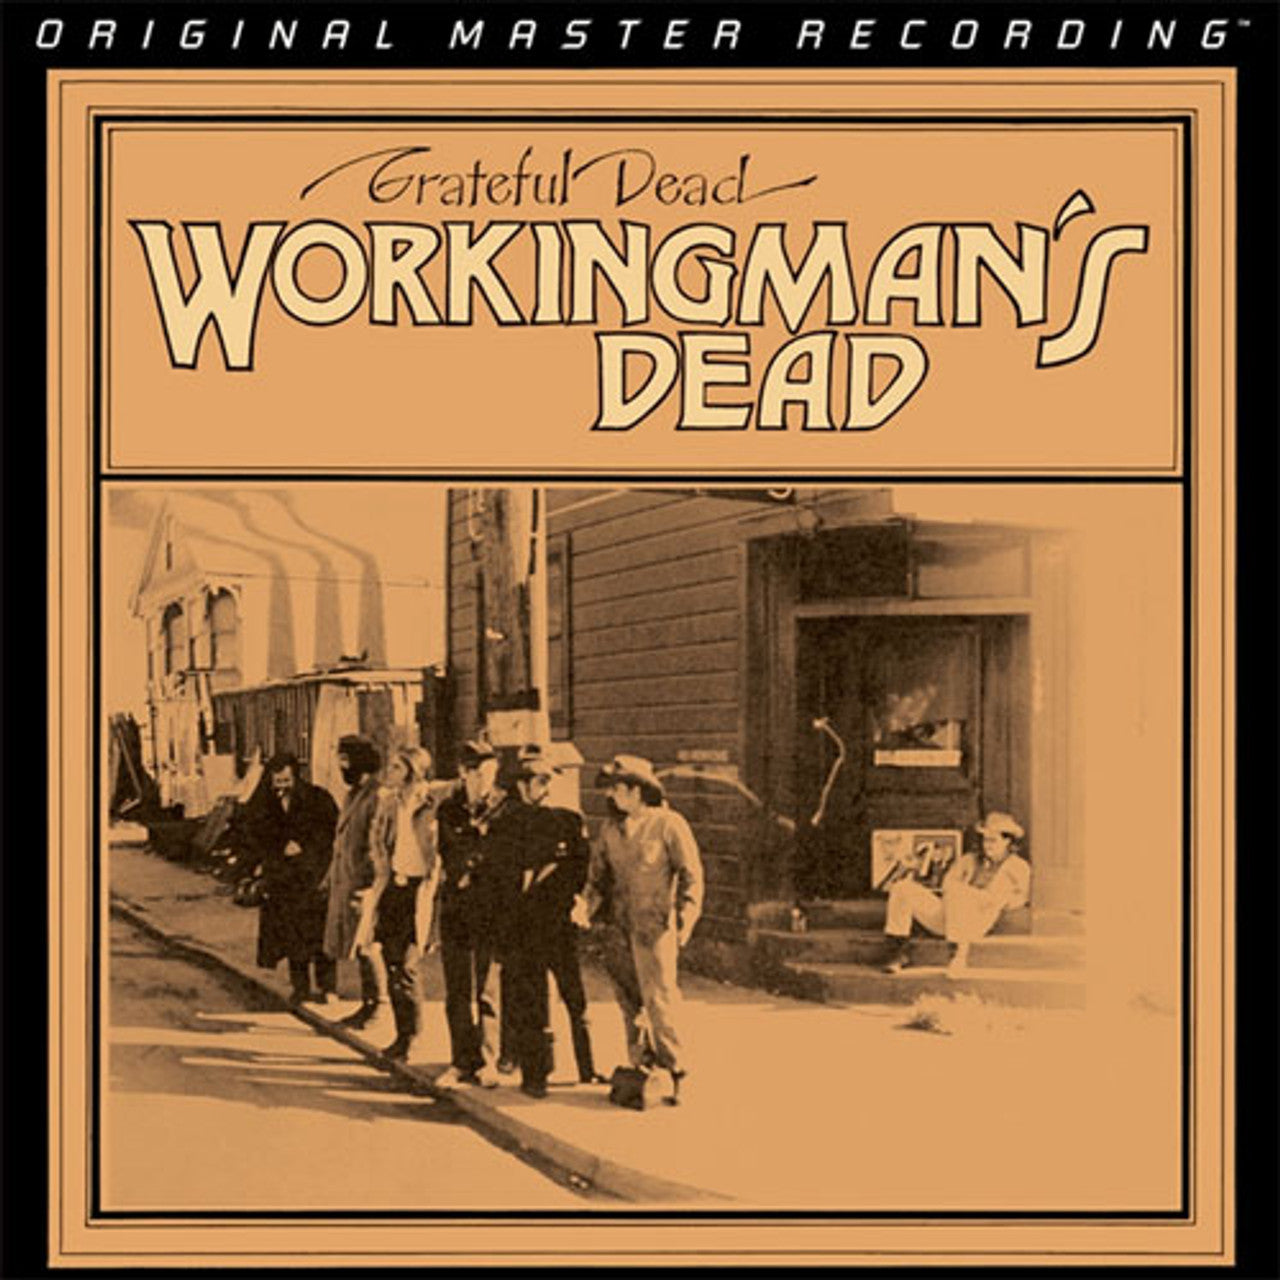 Grateful Dead - Workingman's Dead [2LP] (180 Gram 45RPM Audiophile Vinyl, limited/numbered) (Mobile Fidelity)